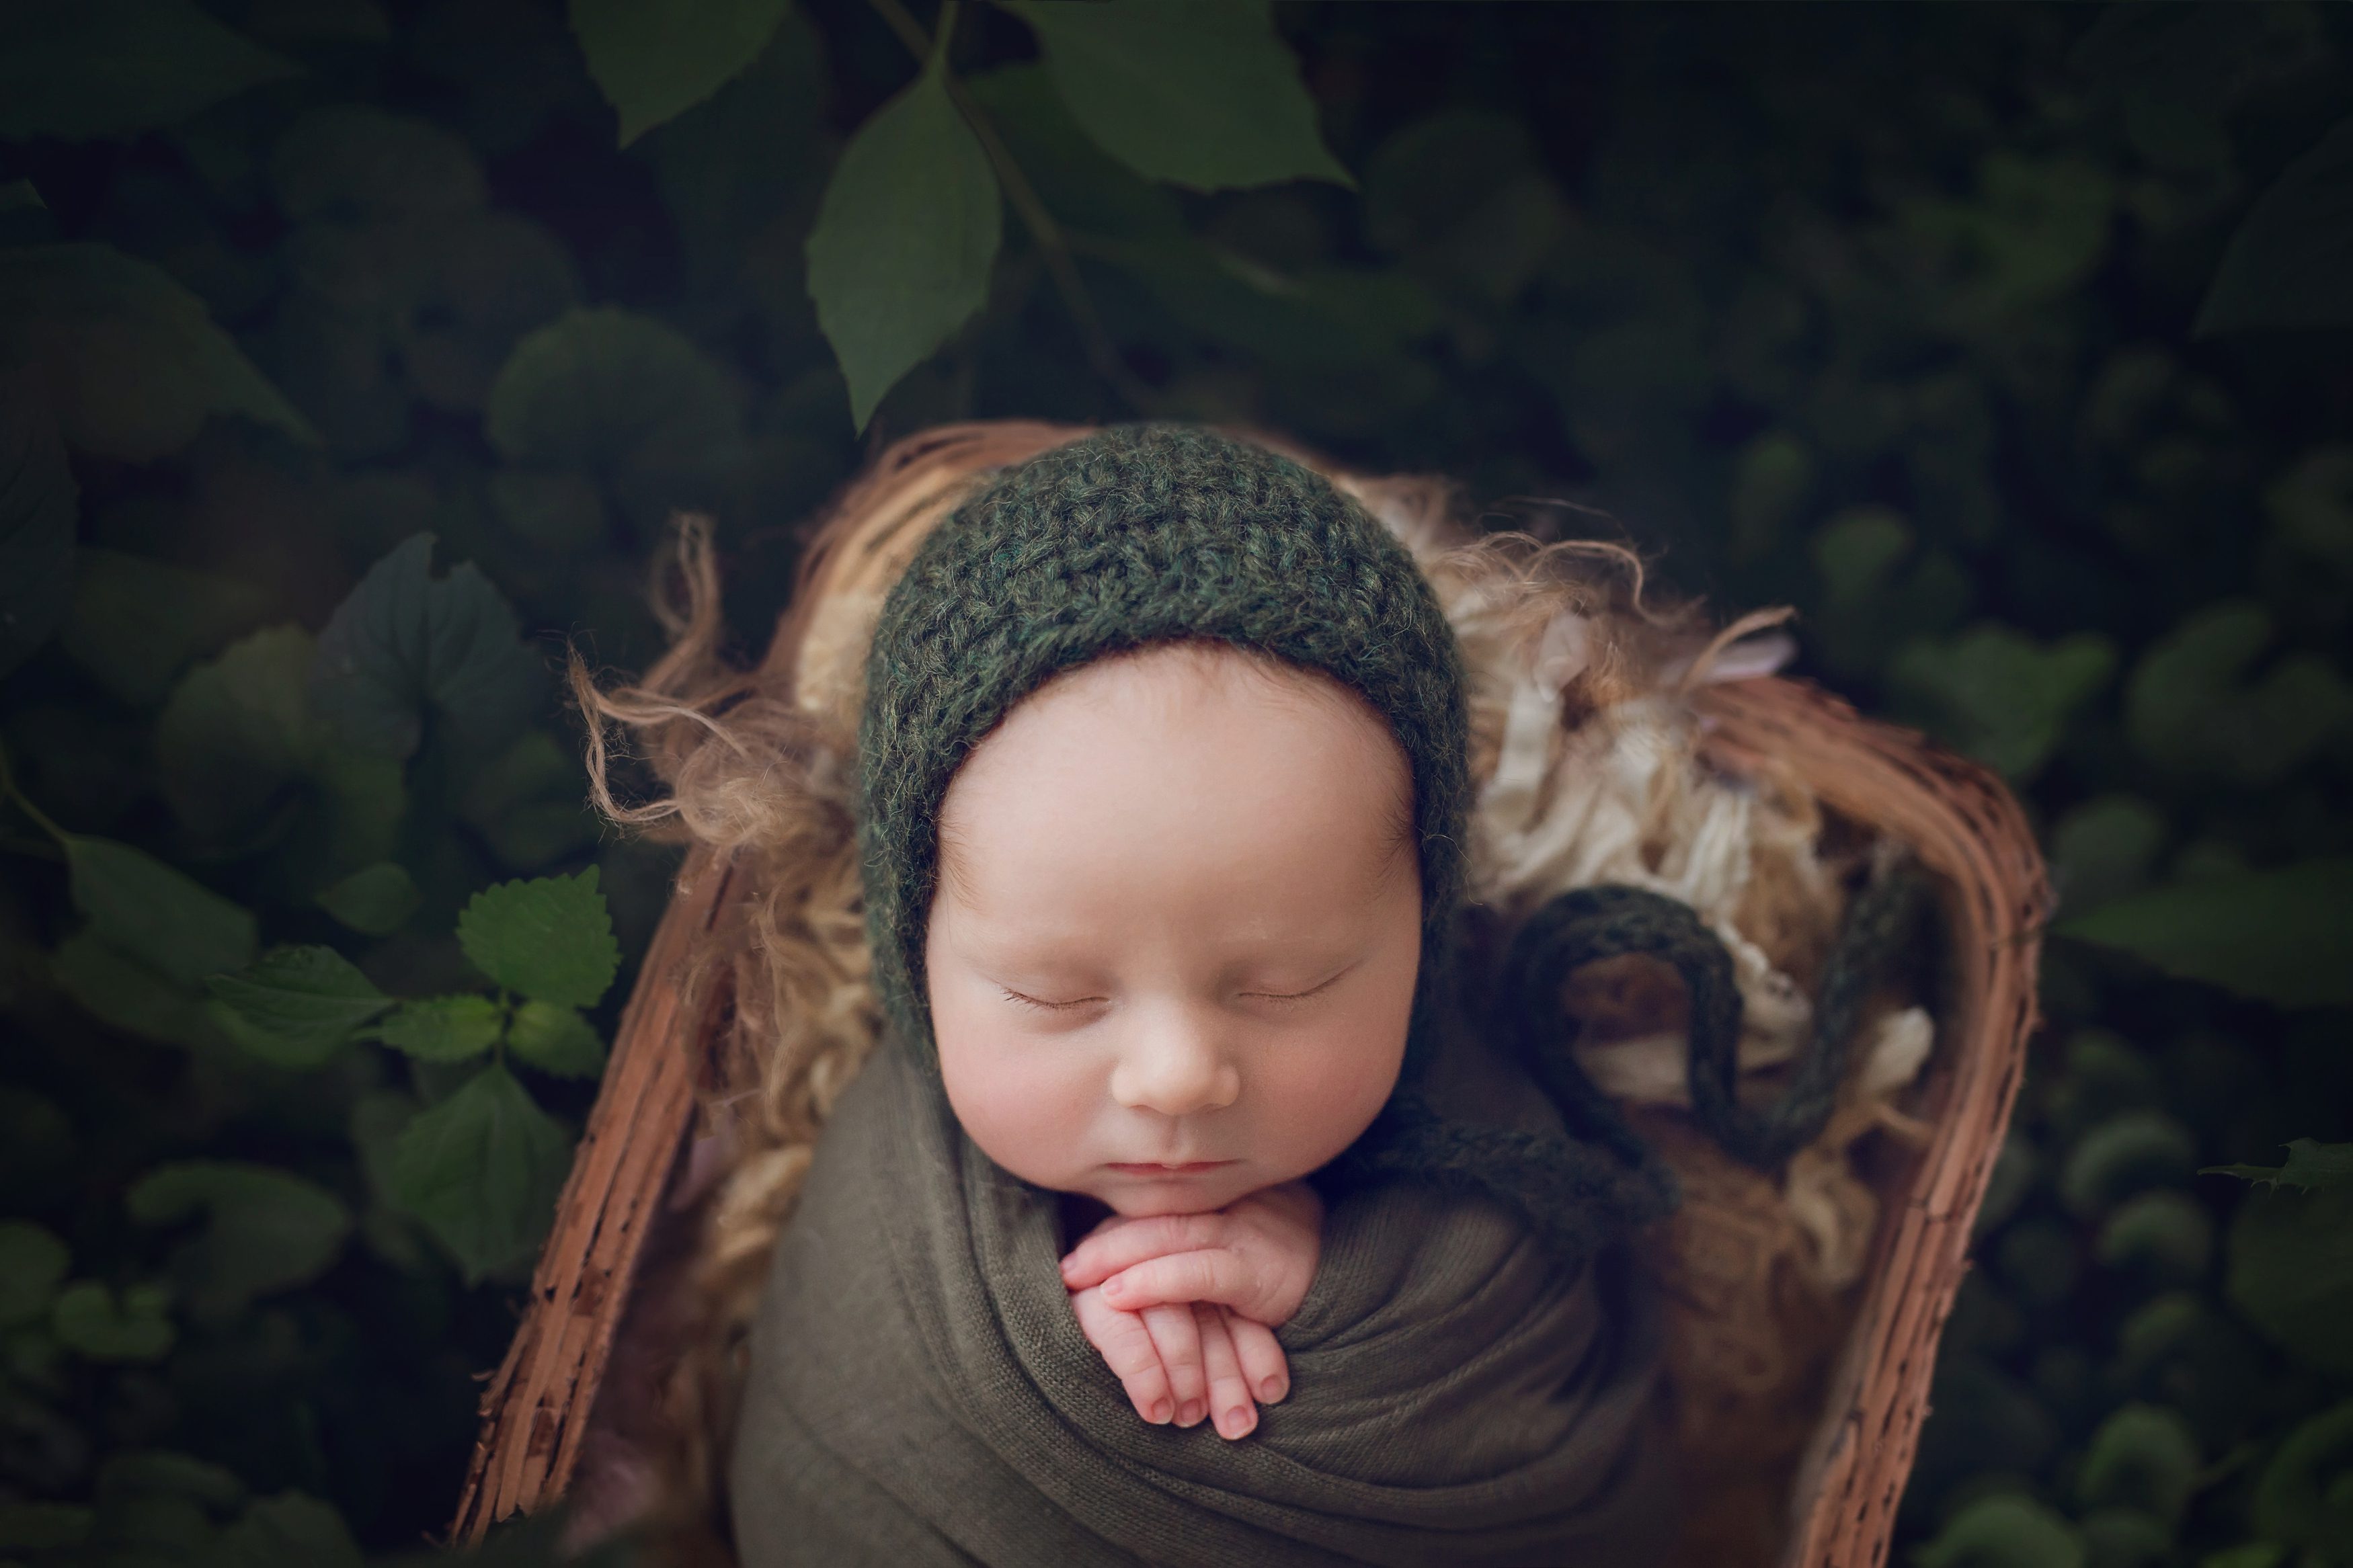 Madison WI newborn photographer - Anna George Photography - www.annageorgephoto.com